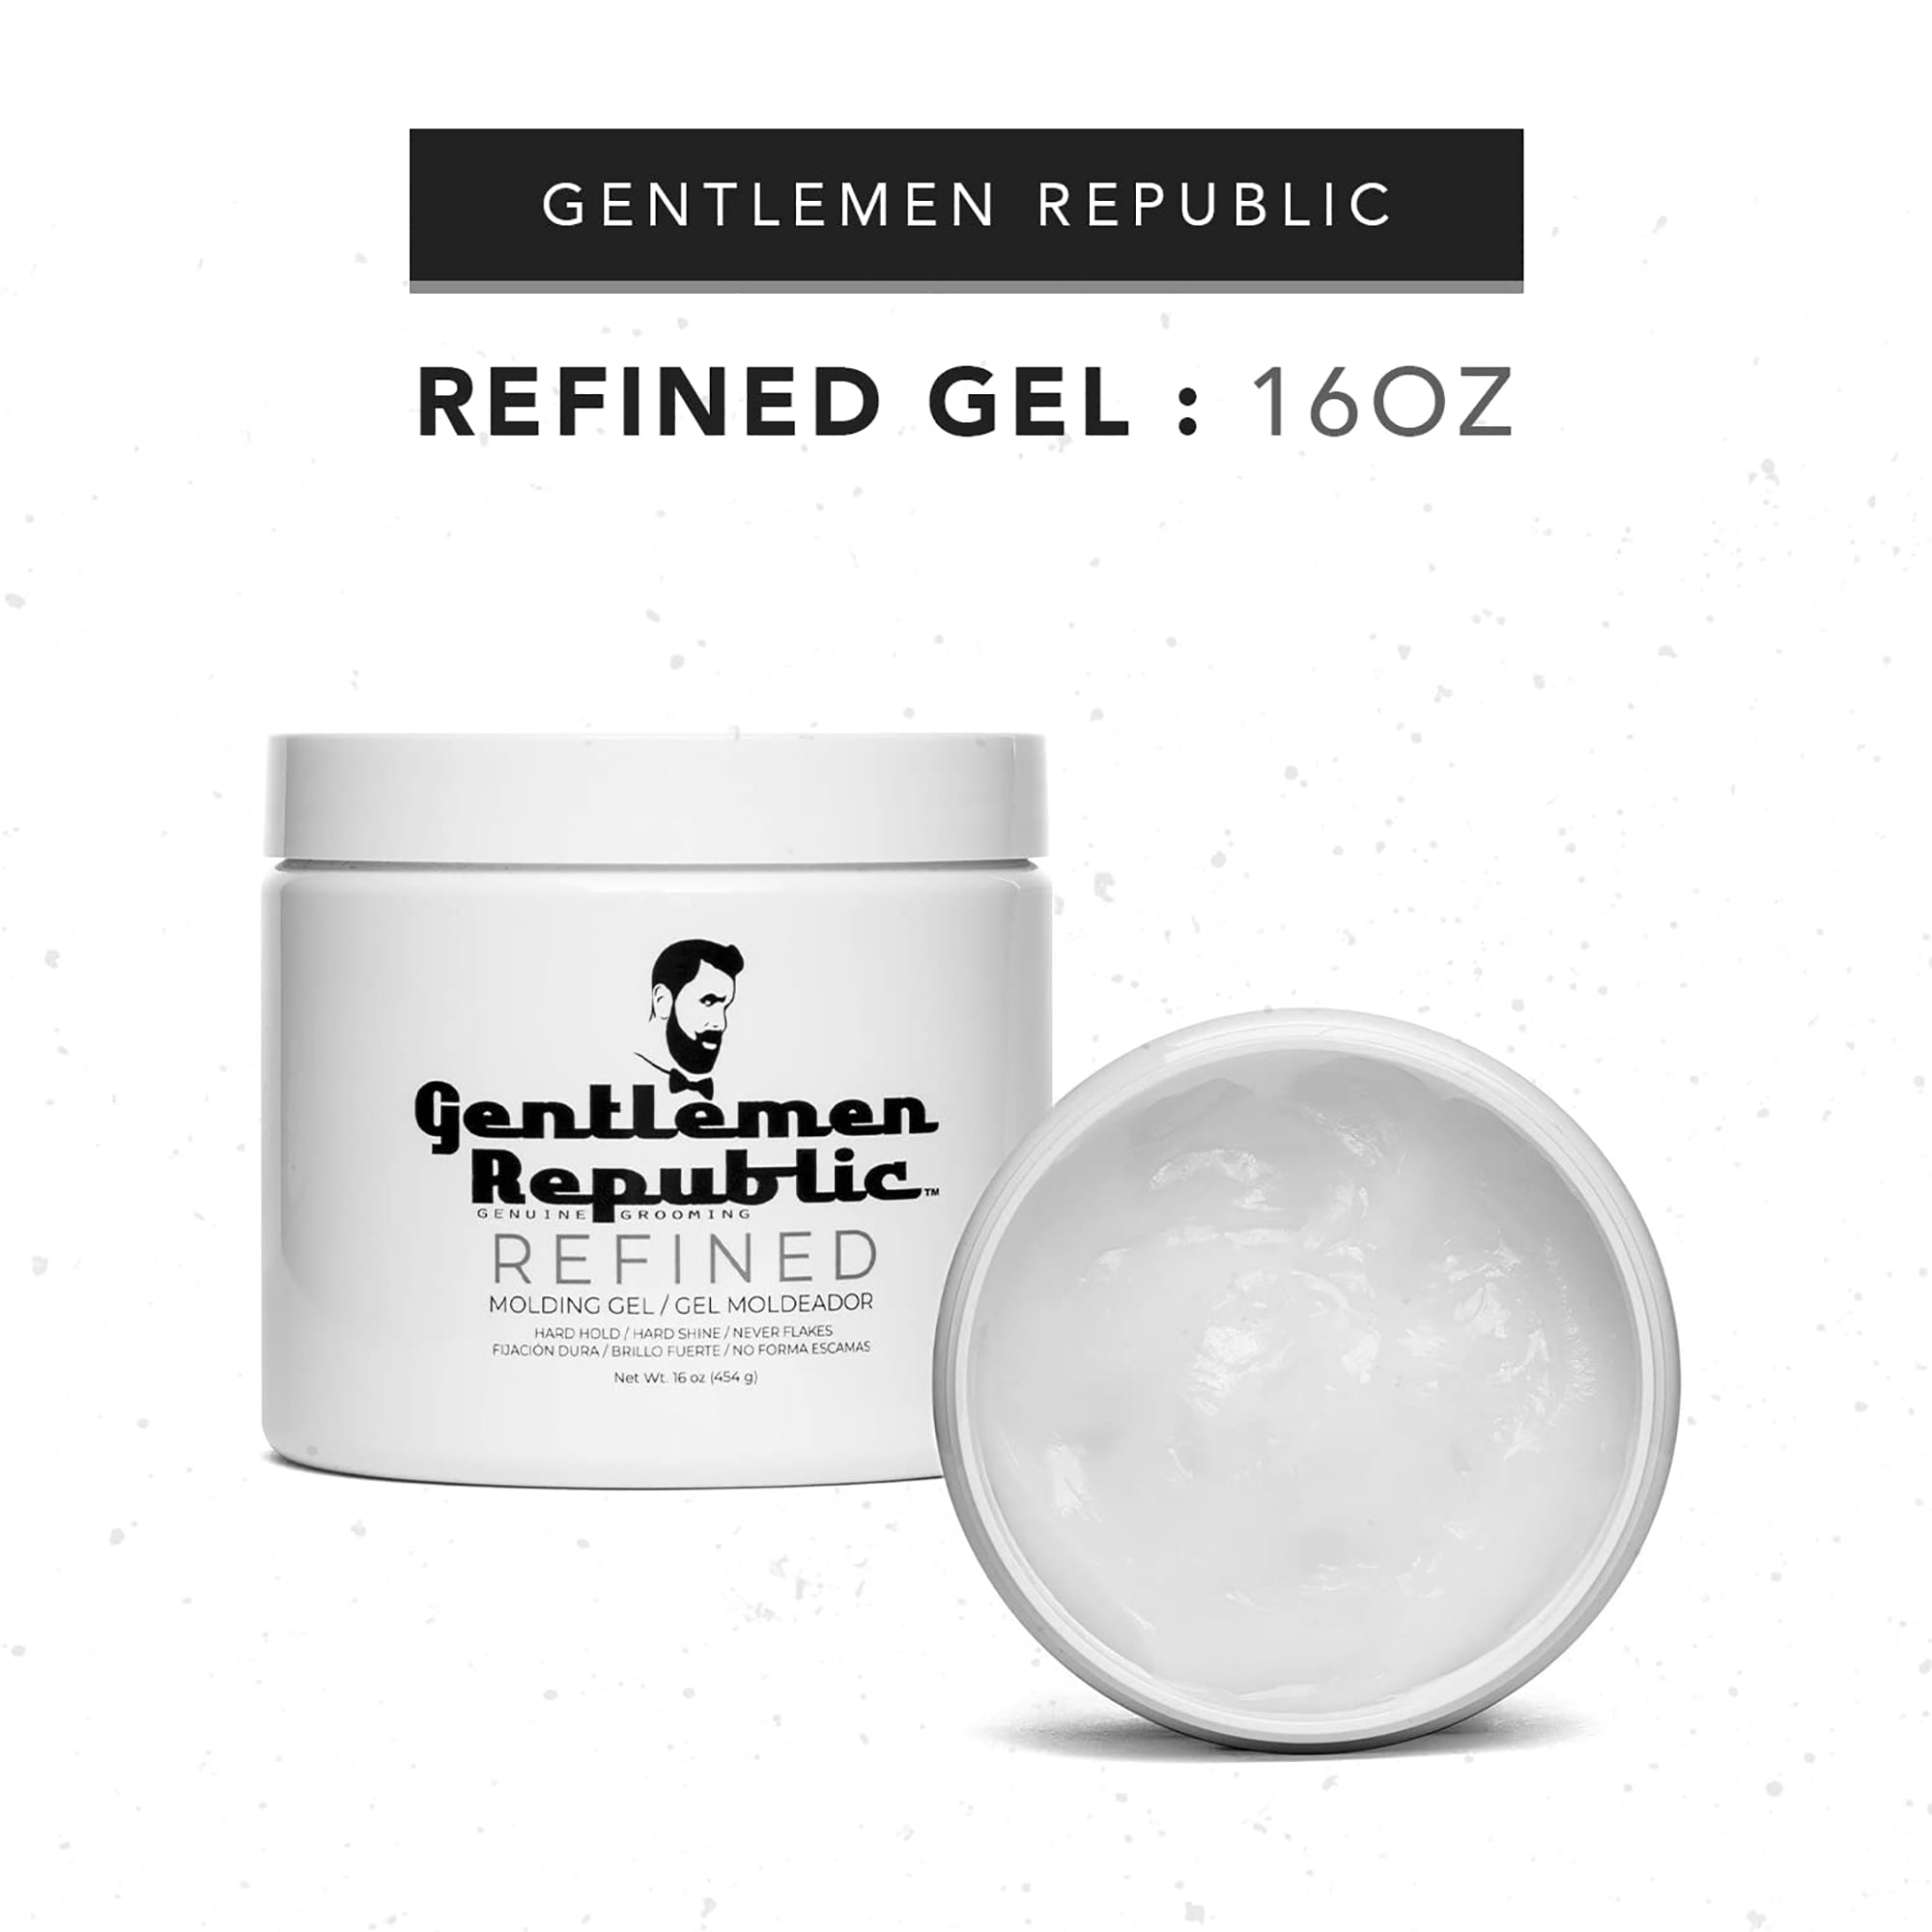 Gentlemen Republic Refined Gel / 16OZ